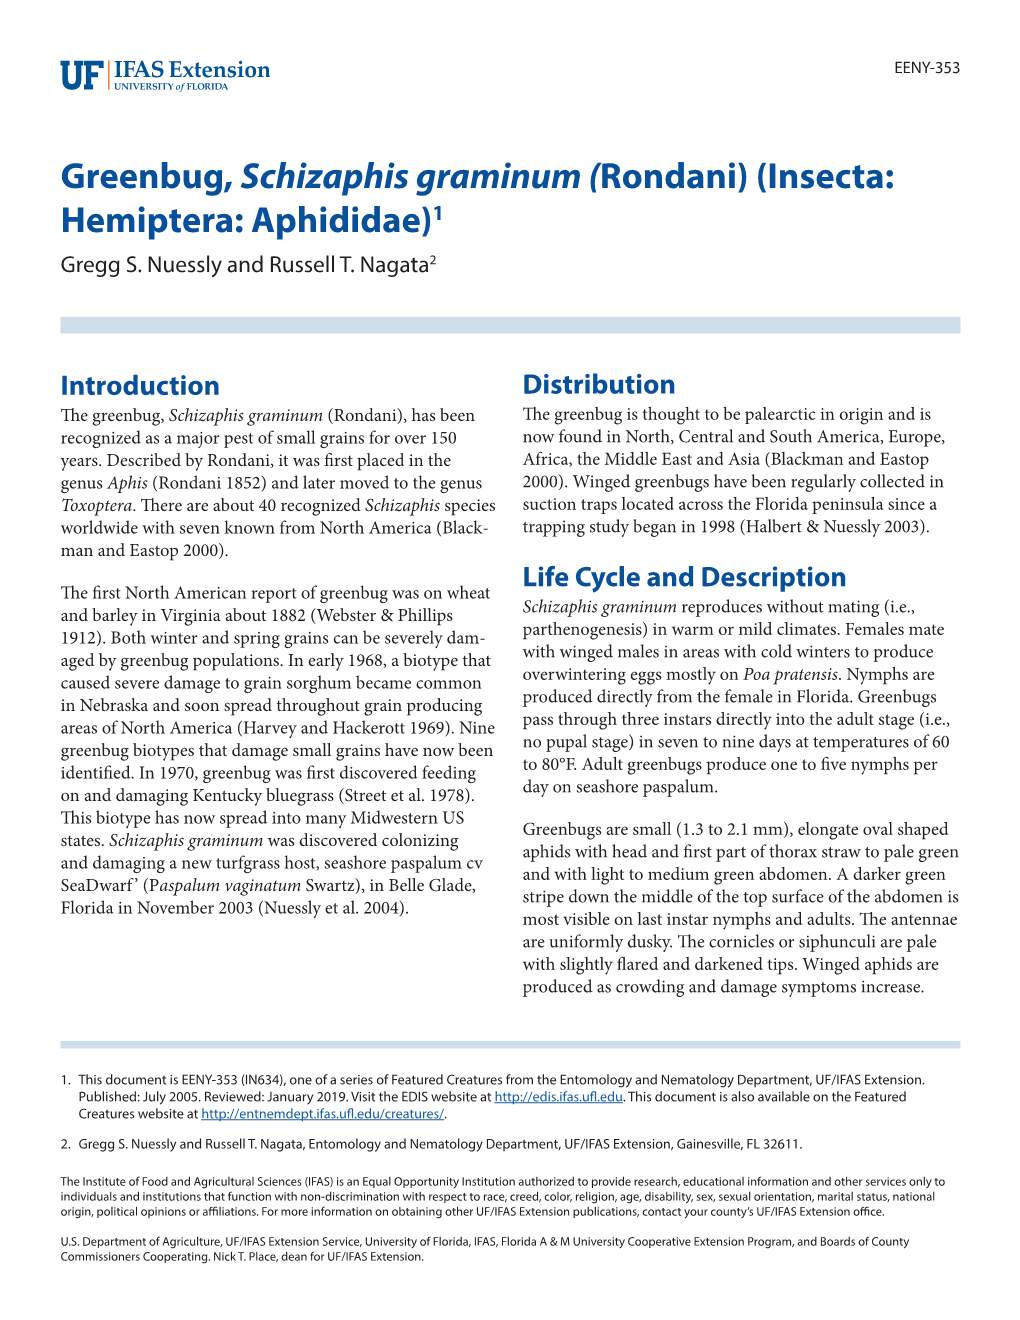 Greenbug, Schizaphis Graminum (Rondani) (Insecta: Hemiptera: Aphididae)1 Gregg S